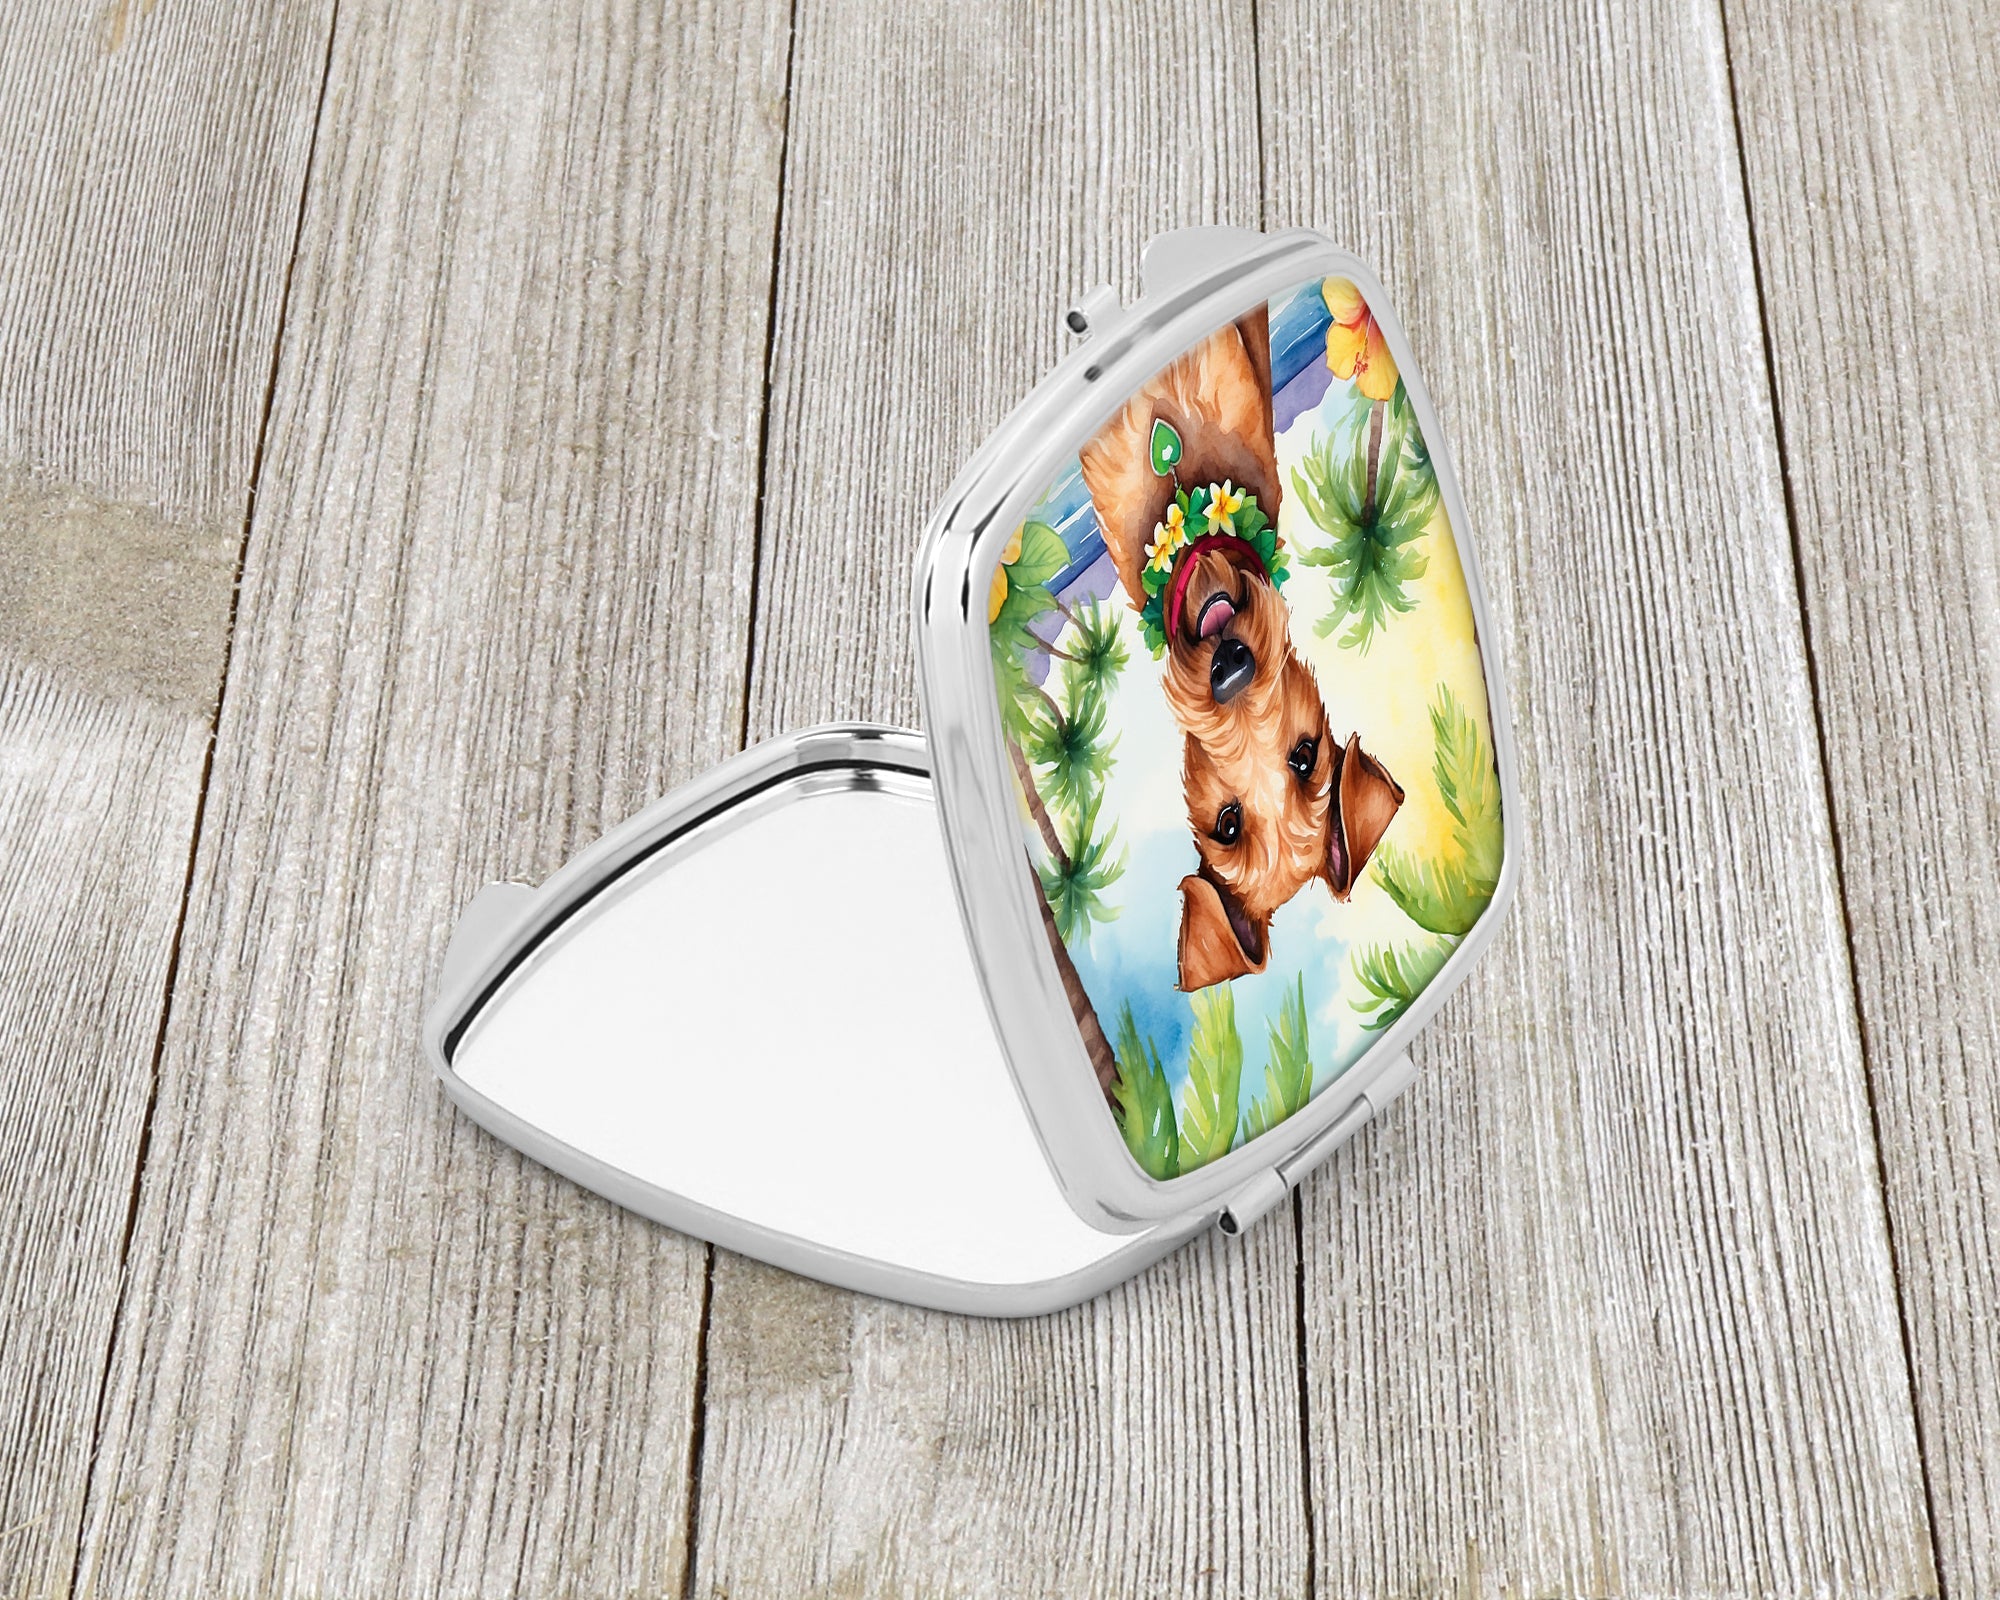 Buy this Irish Terrier Luau Compact Mirror